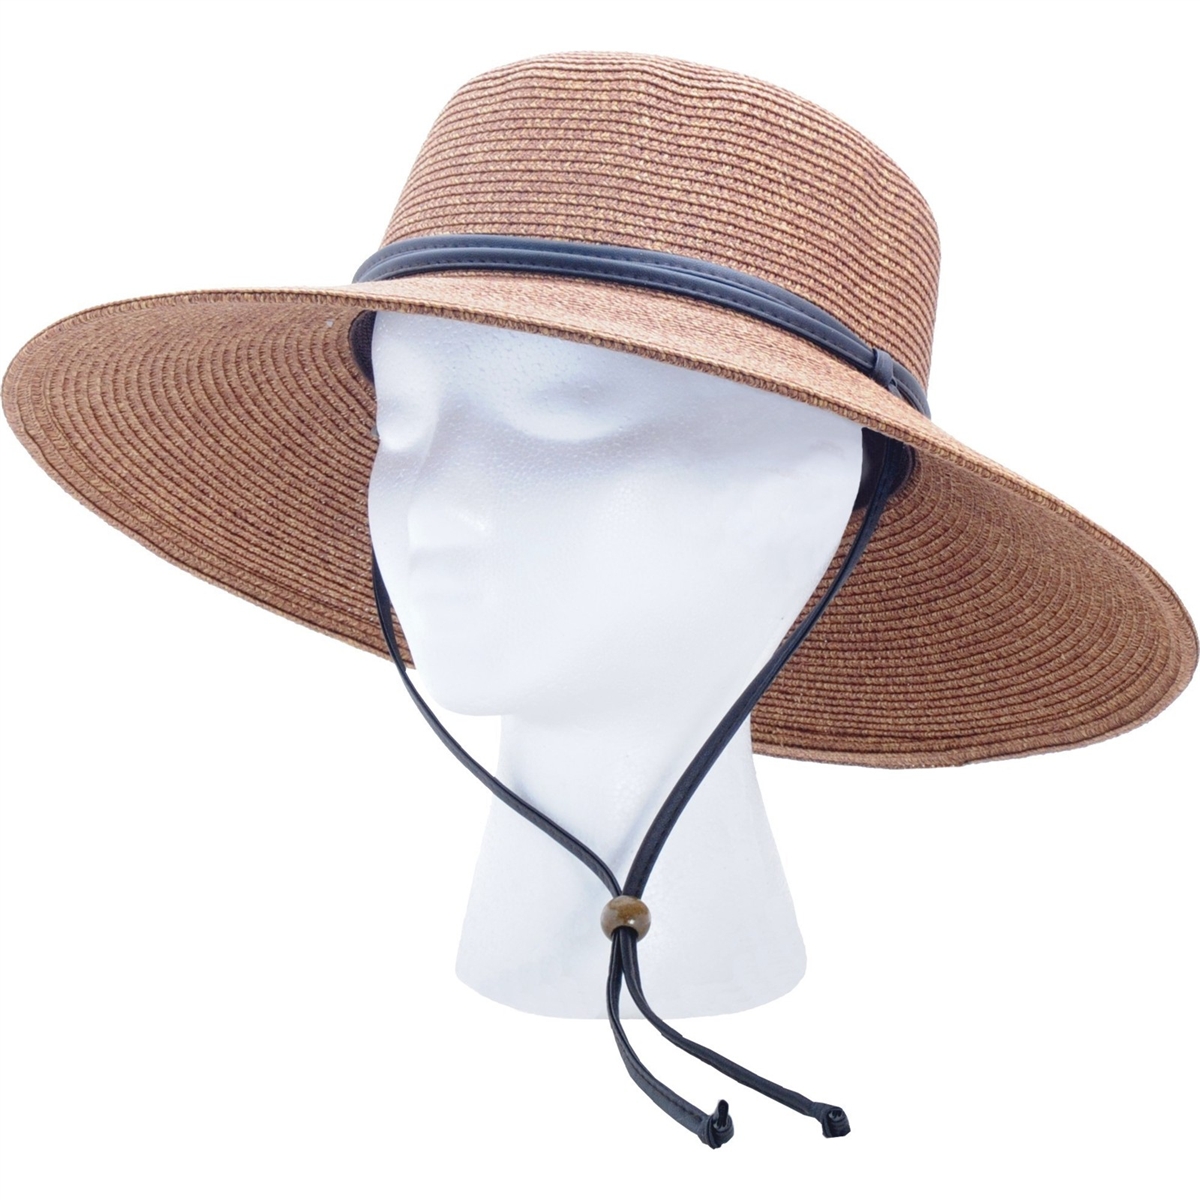 Women's Braided Sun Hat - Dark Brown UPF 50+